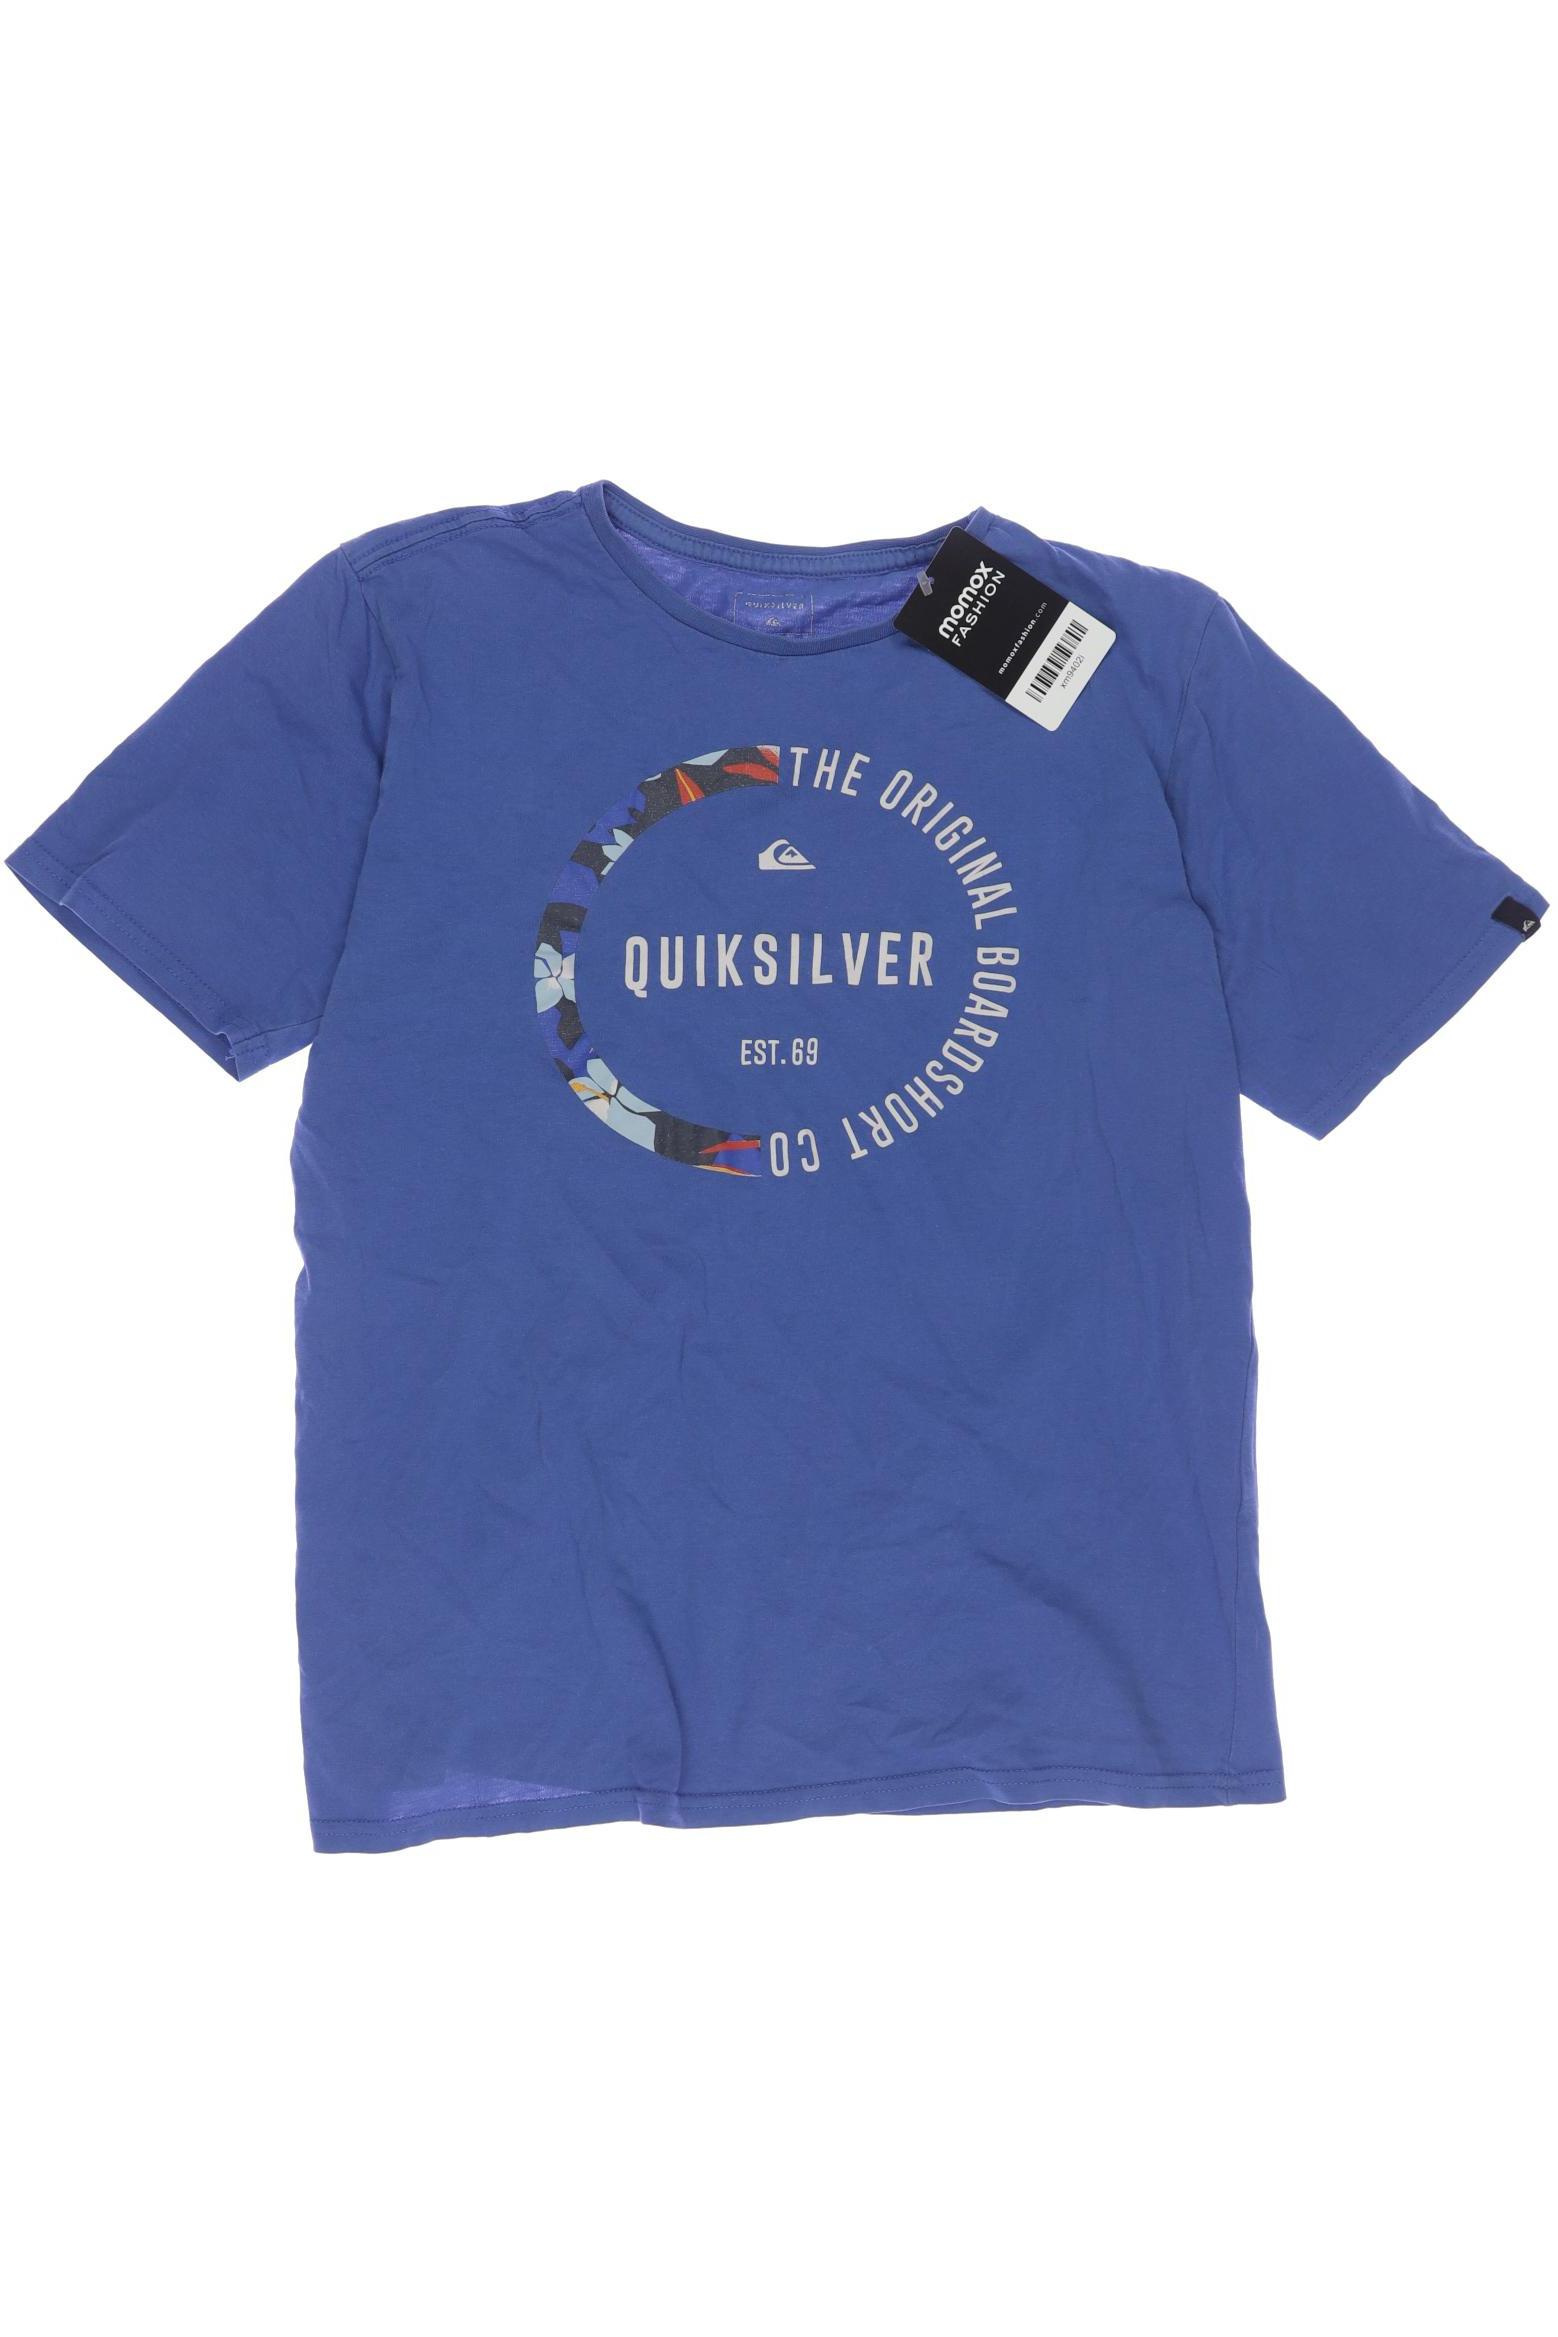 QUIKSILVER Jungen T-Shirt, blau von Quiksilver